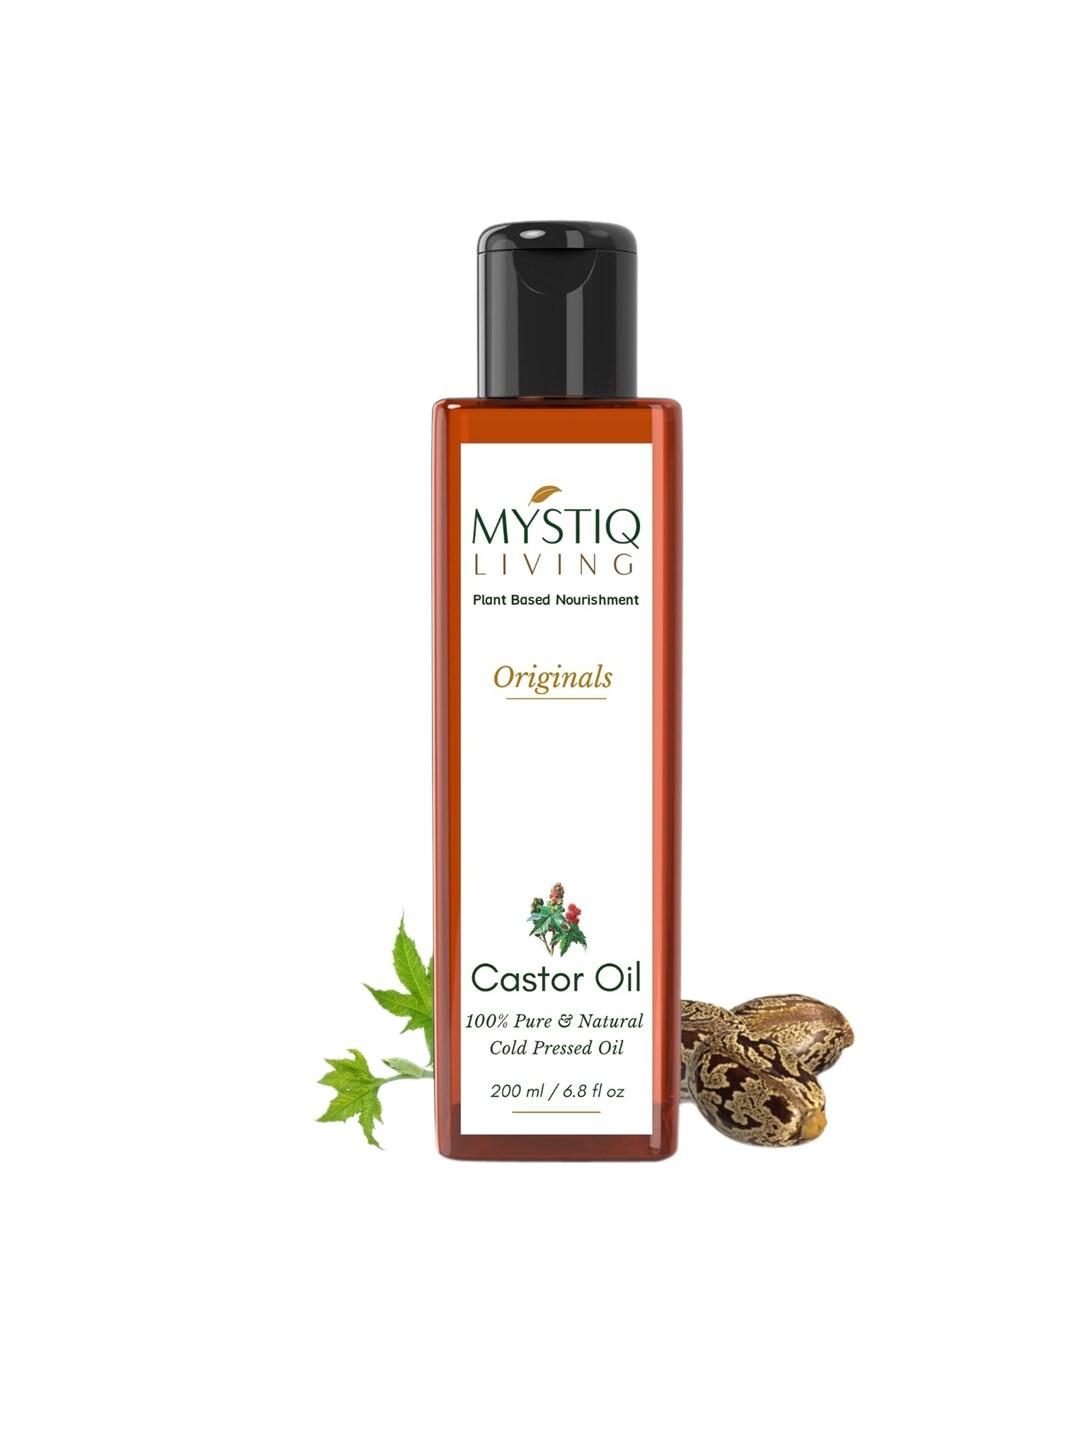 MYSTIQ LIVING 100% Pure & Natural Originals Cold Pressed Castor Oil for Hair & Skin- 200ml